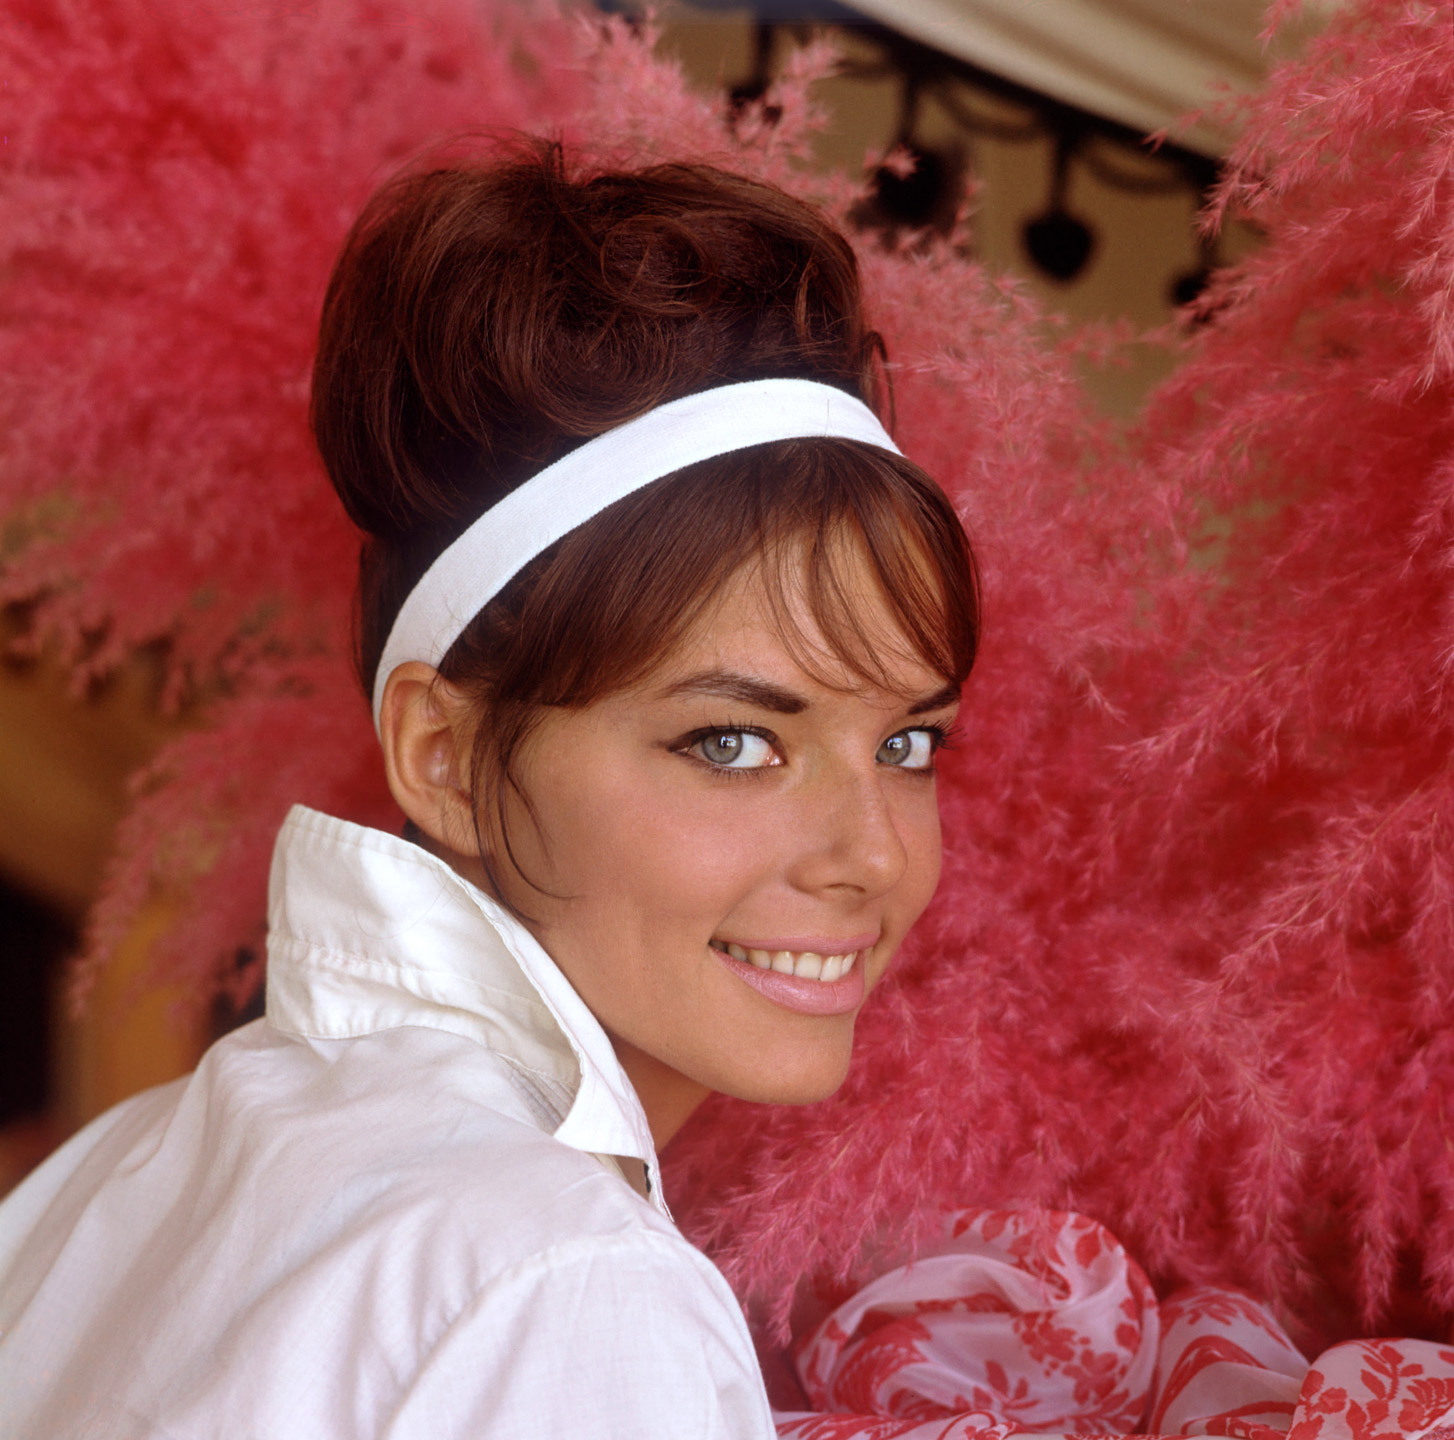 Jo Collins - Playmates / Miss December 1964.